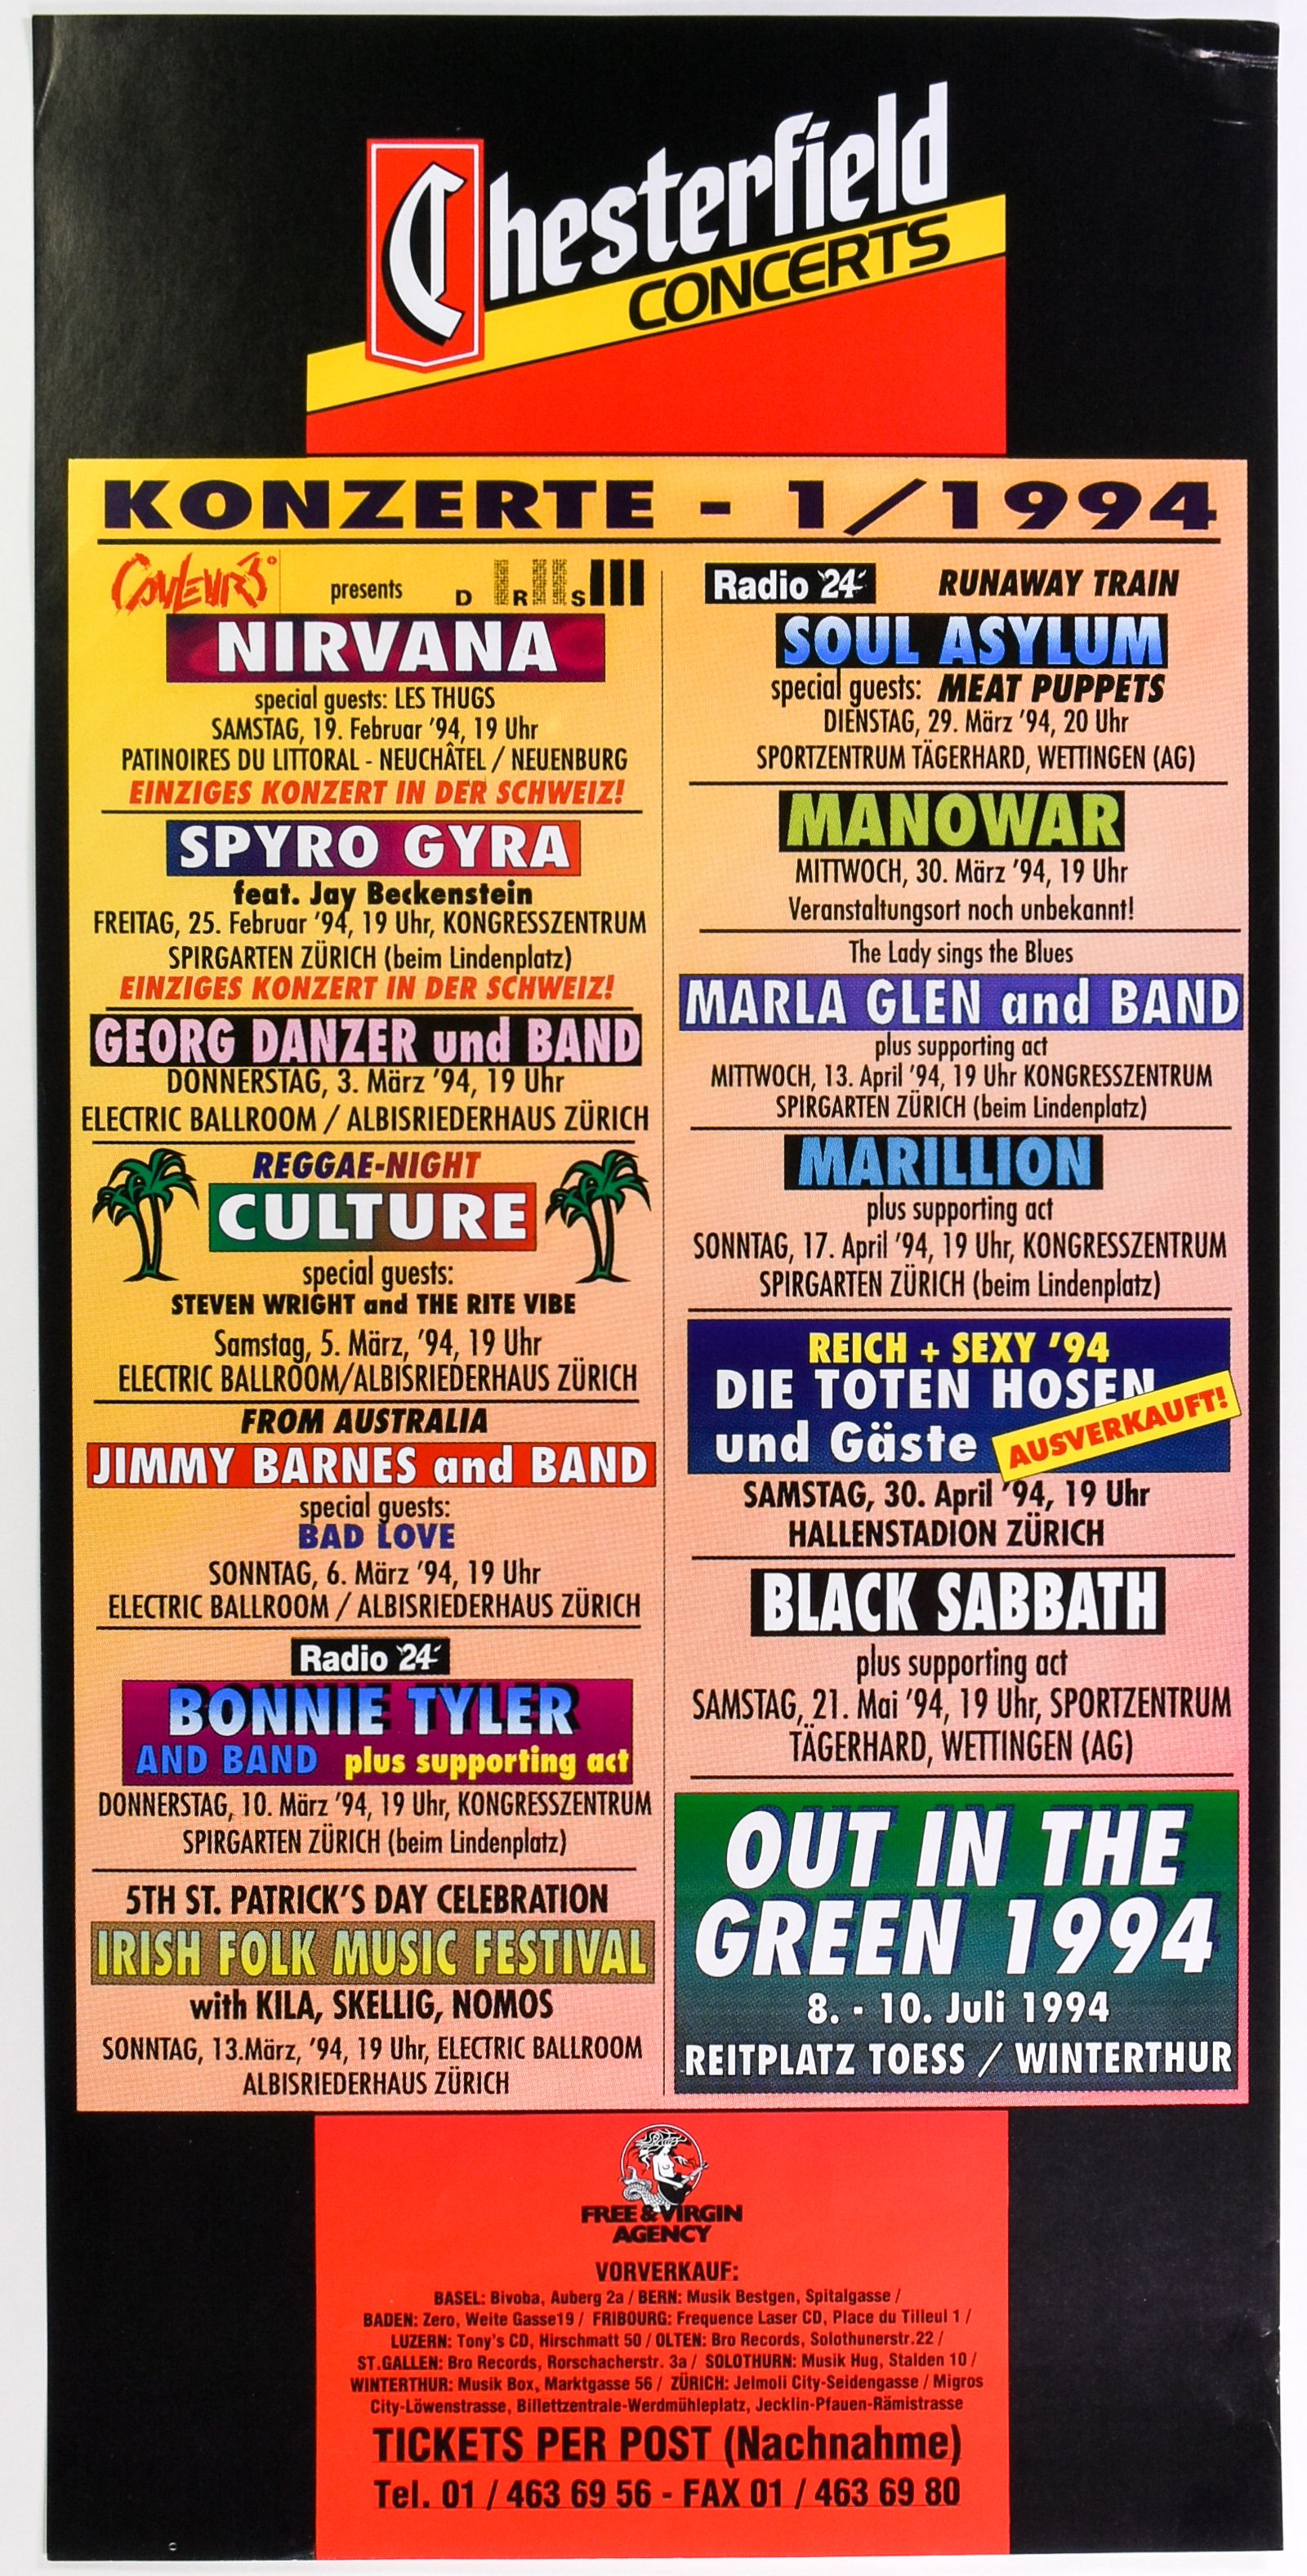 Nirvana, Black Sabbath & Manowar - Chesterfield Concerts Promotional Calendar 1994 Concert Poster